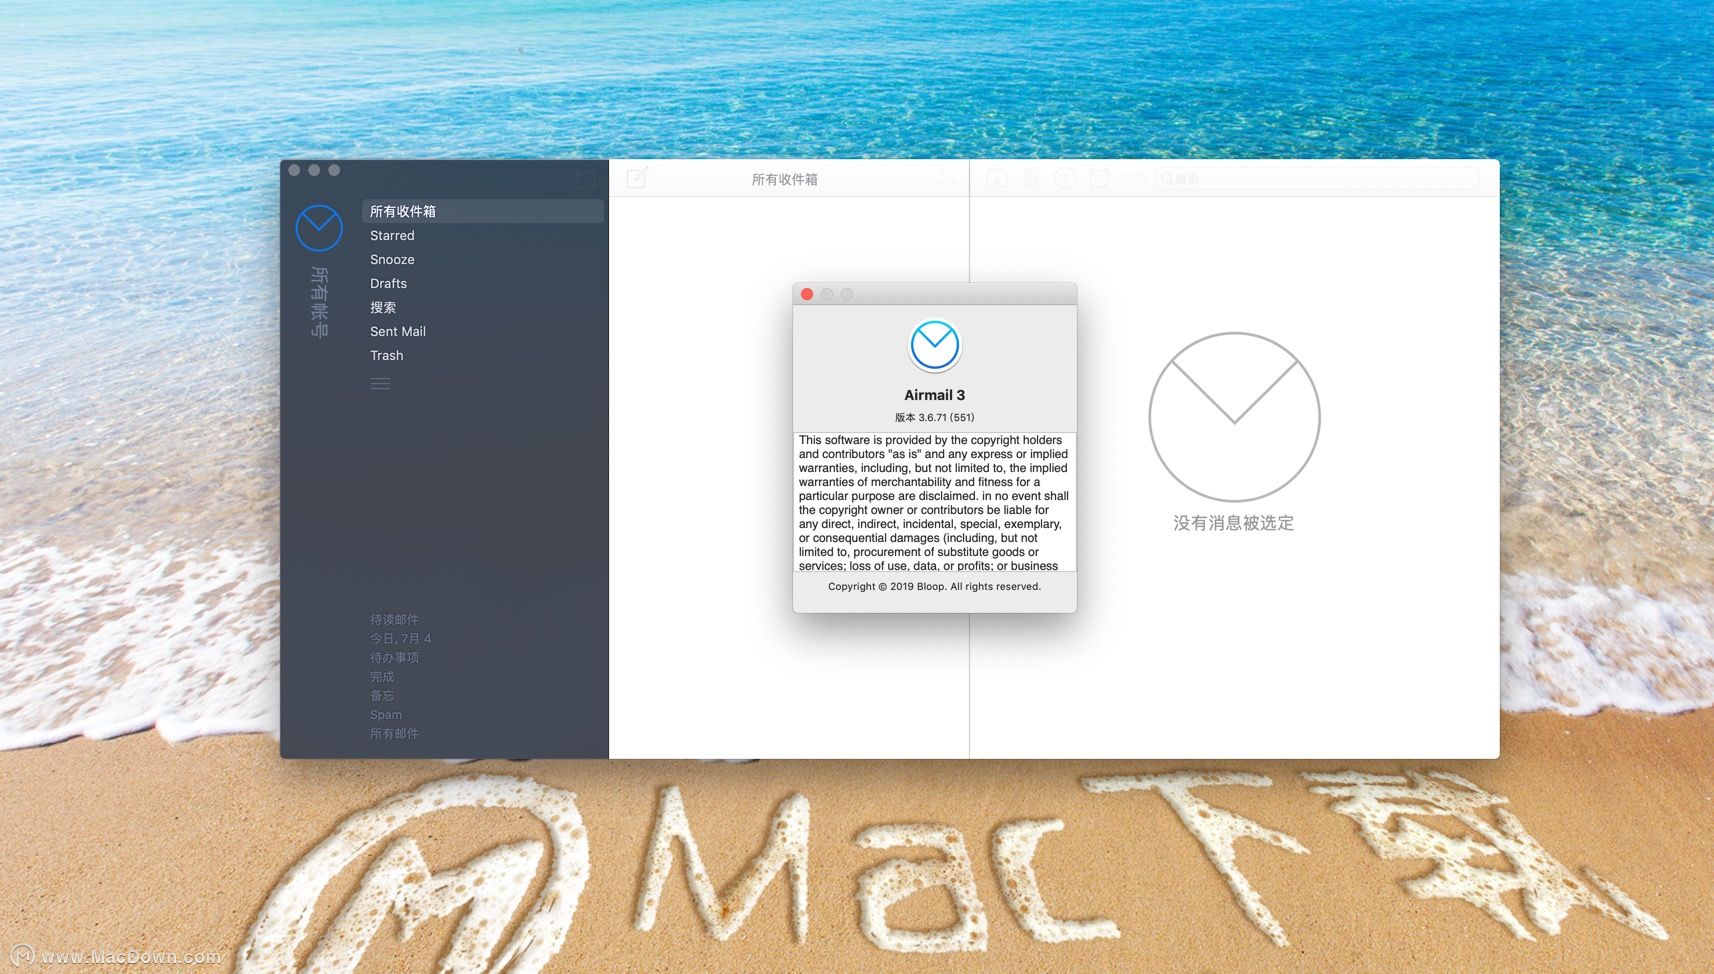 airmail 3 mac torrent